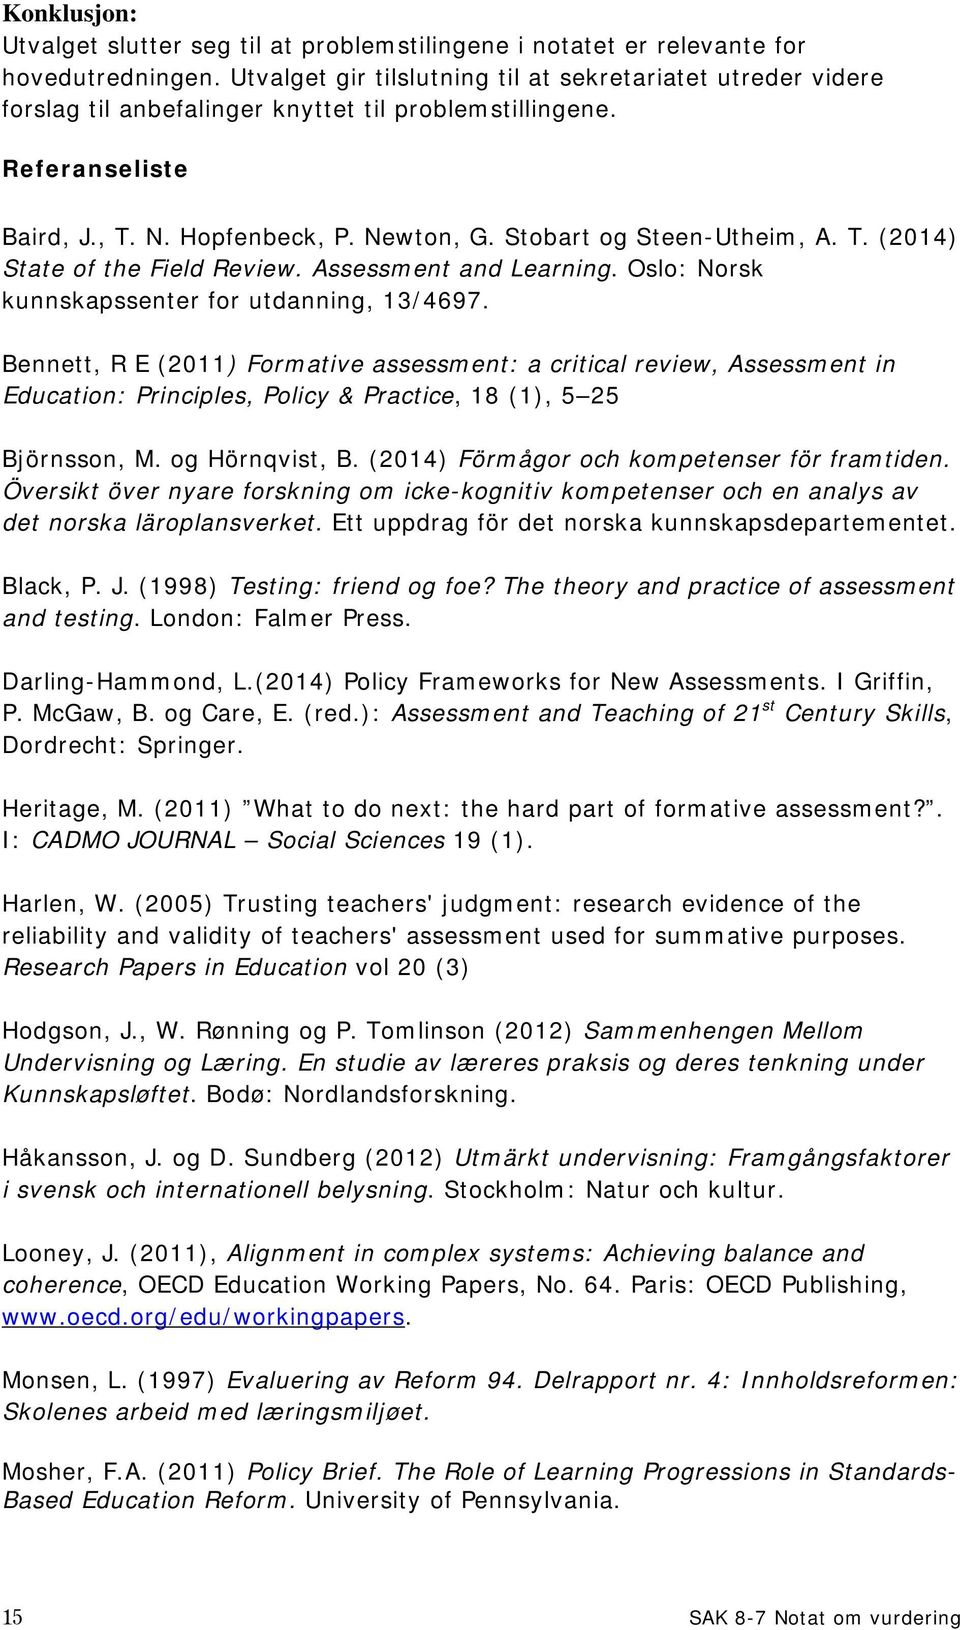 Stobart og Steen-Utheim, A. T. (2014) State of the Field Review. Assessment and Learning. Oslo: Norsk kunnskapssenter for utdanning, 13/4697.